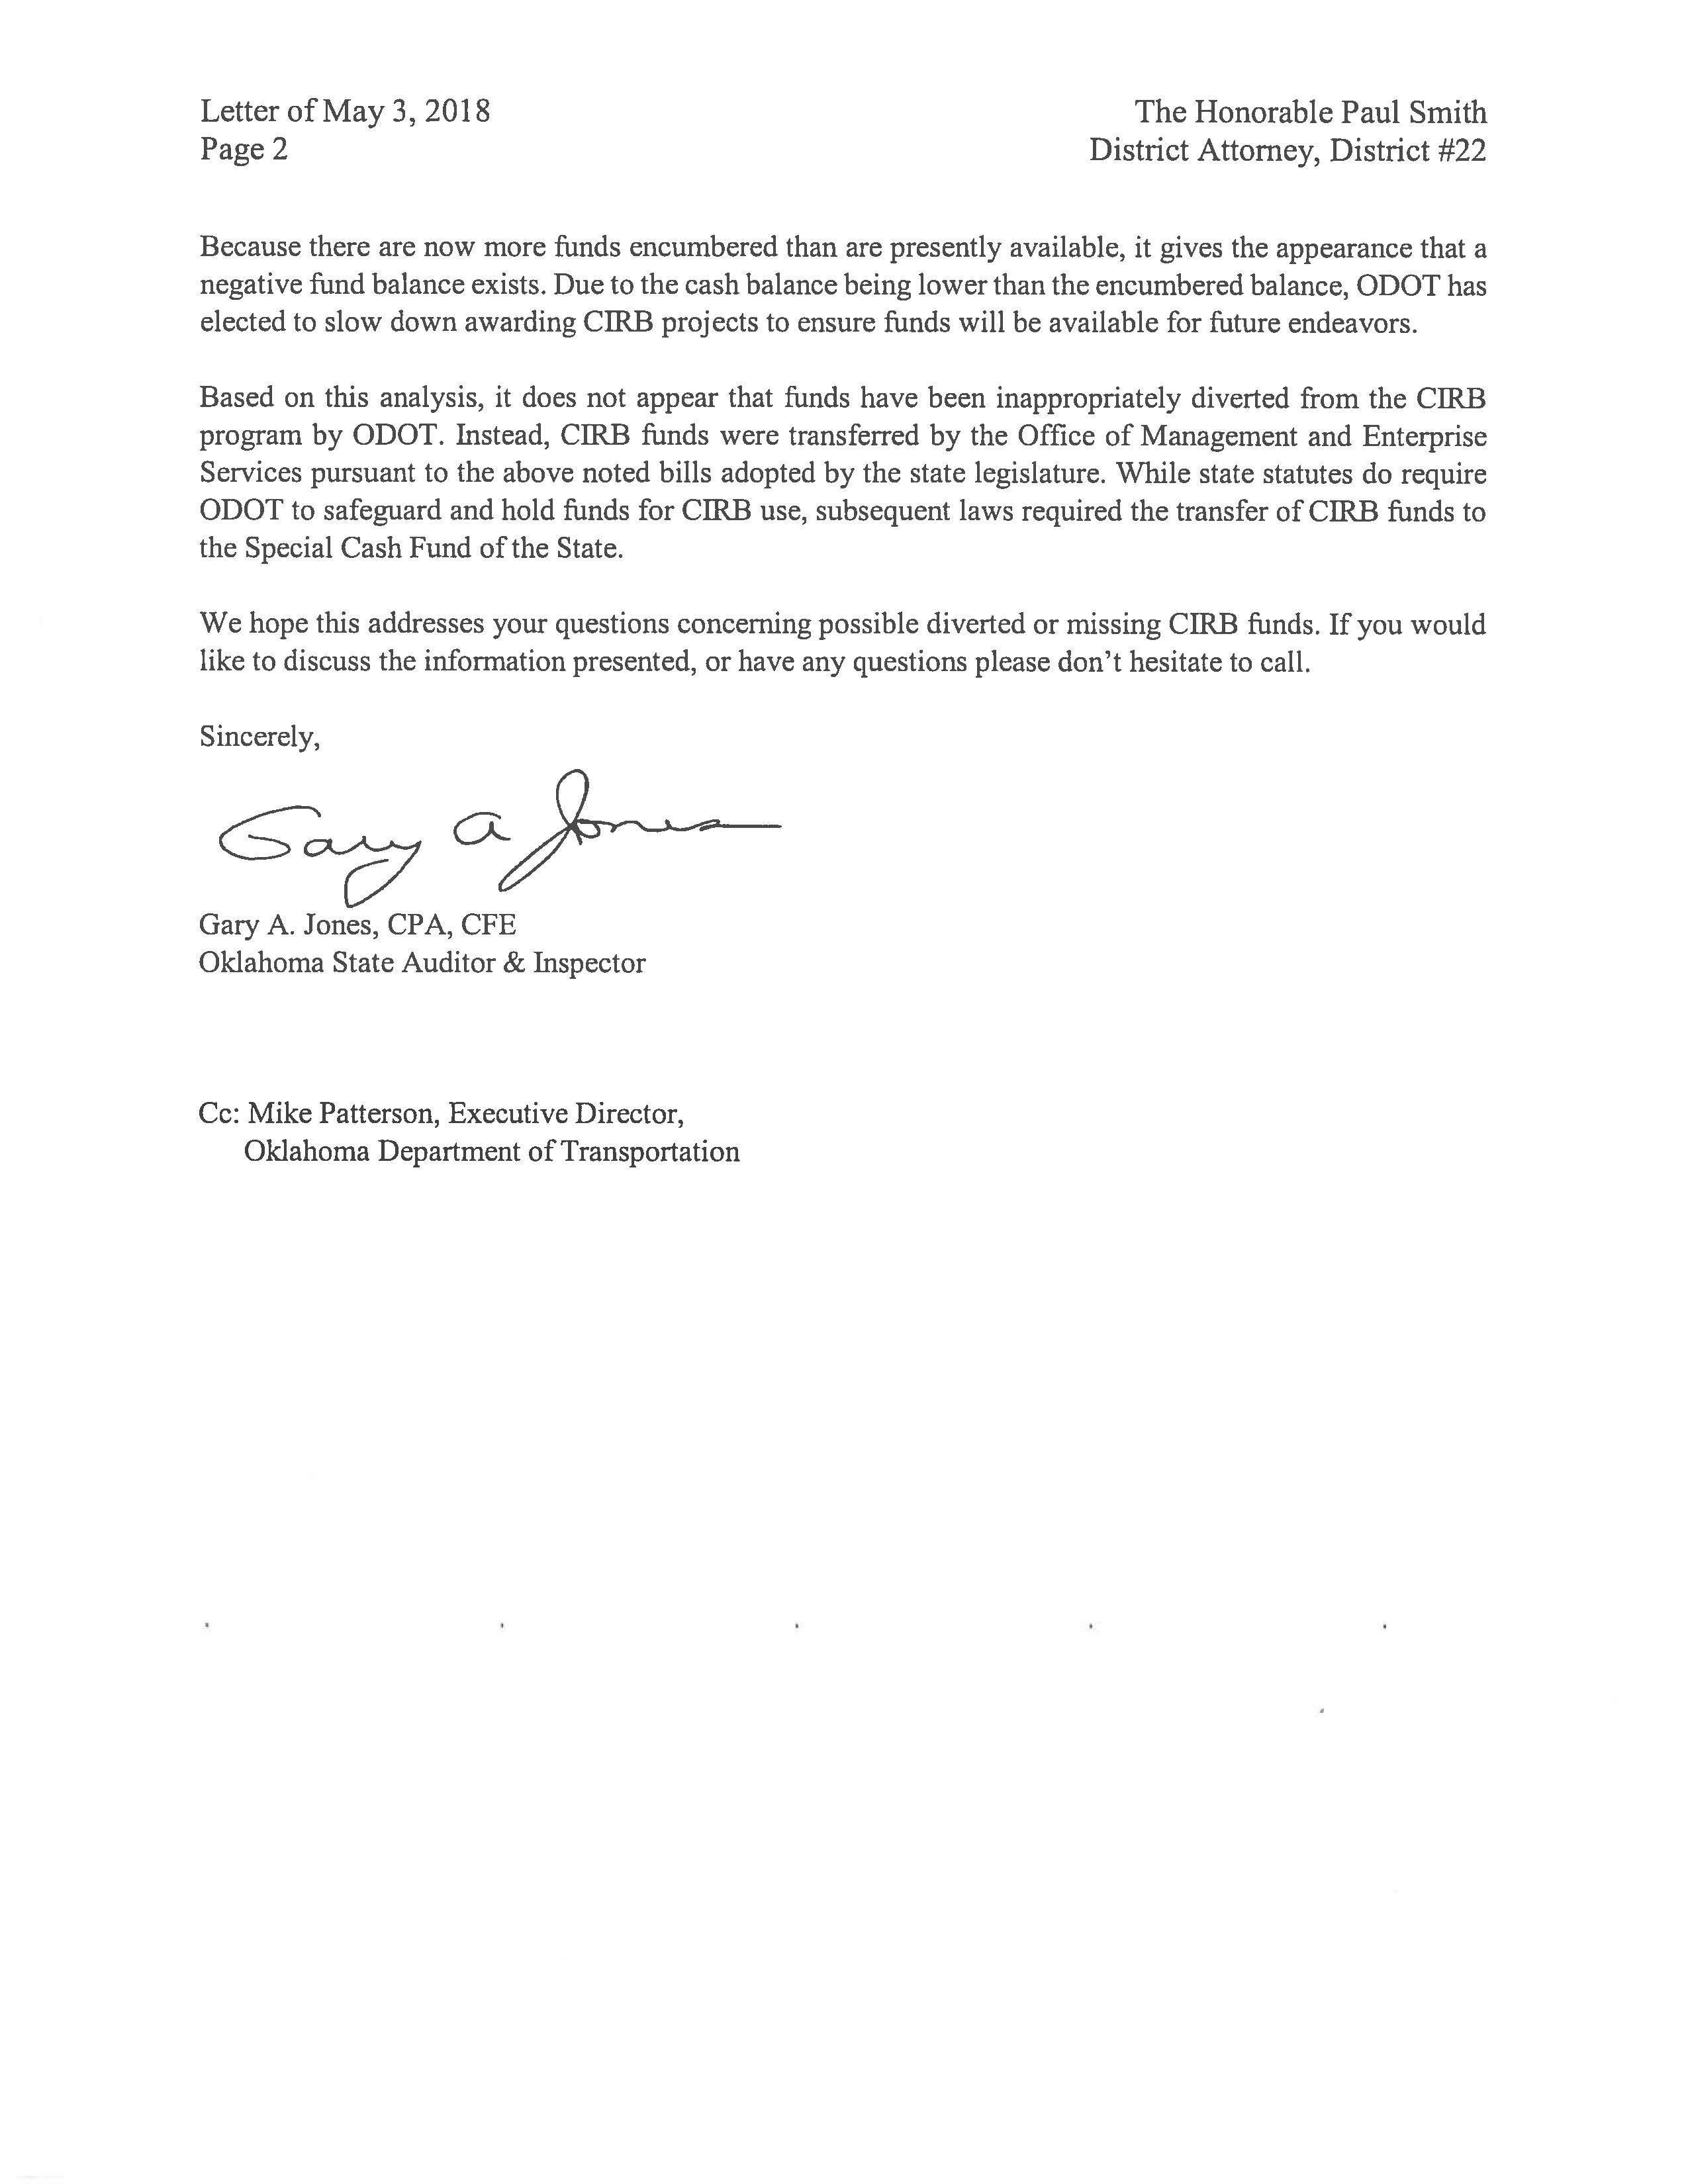 Gary Jones letter to DA Paul Smith page 2